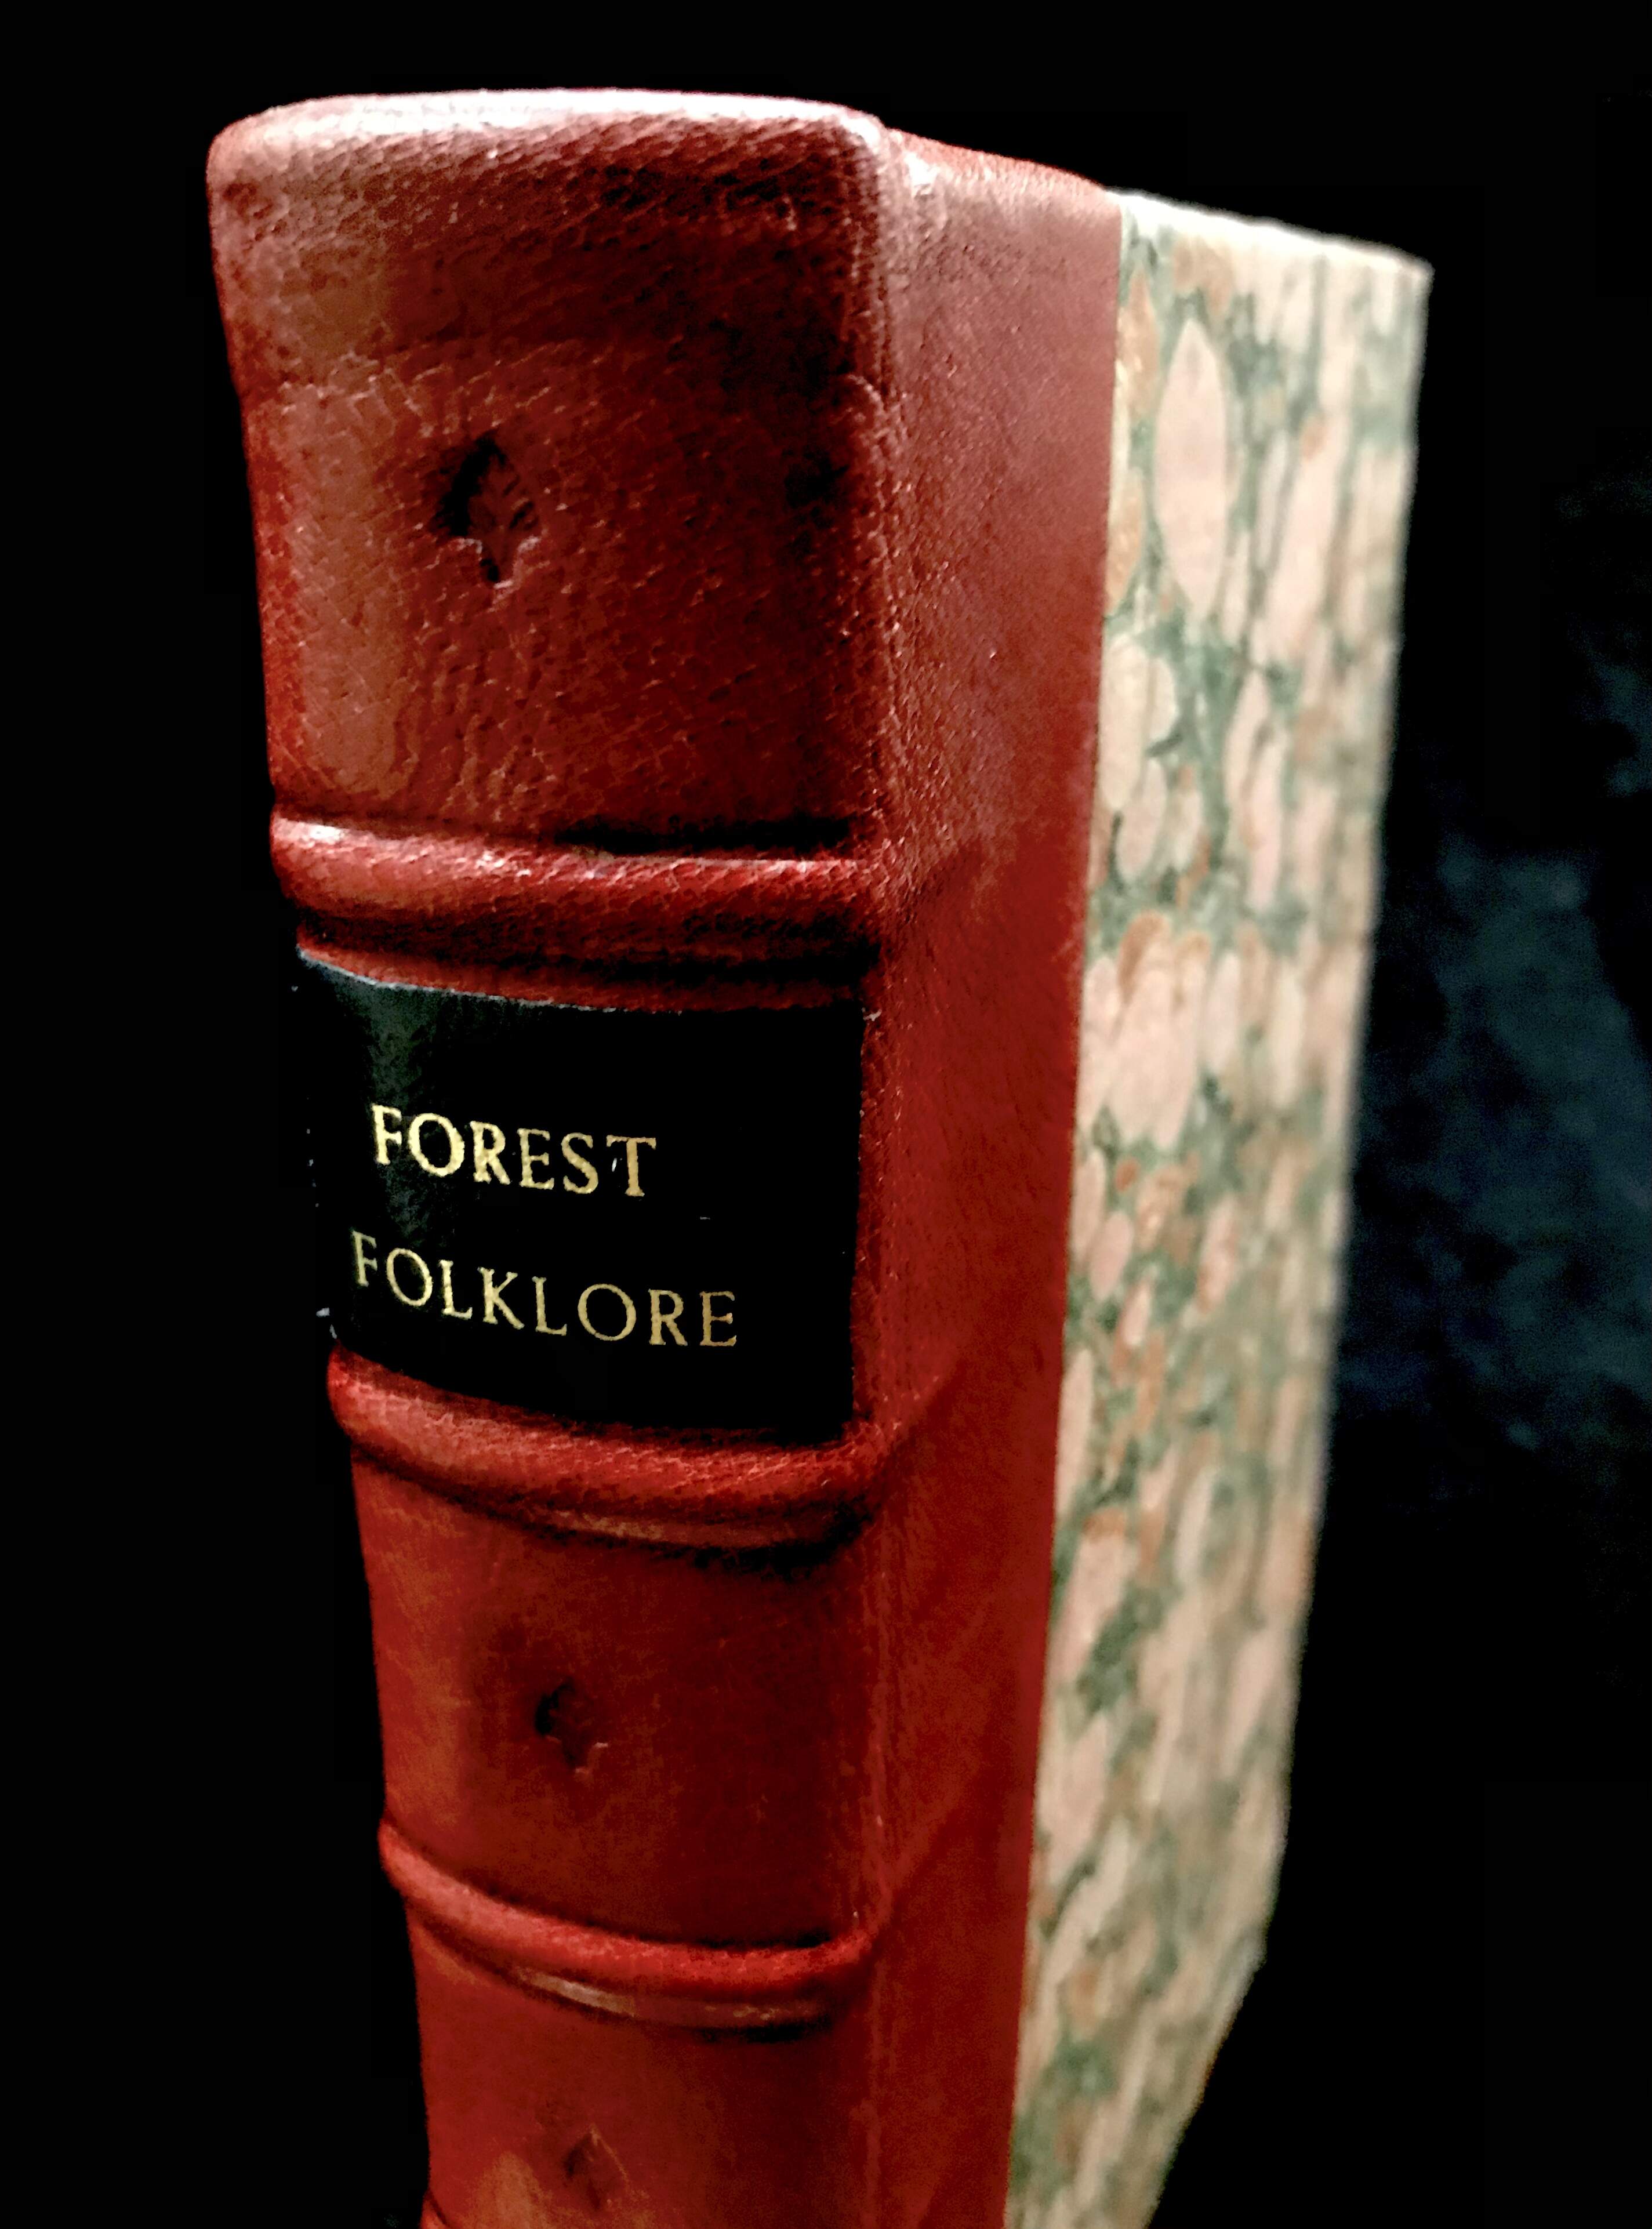 Forest Folklore, Mythology & Romance by Alexander Porteous